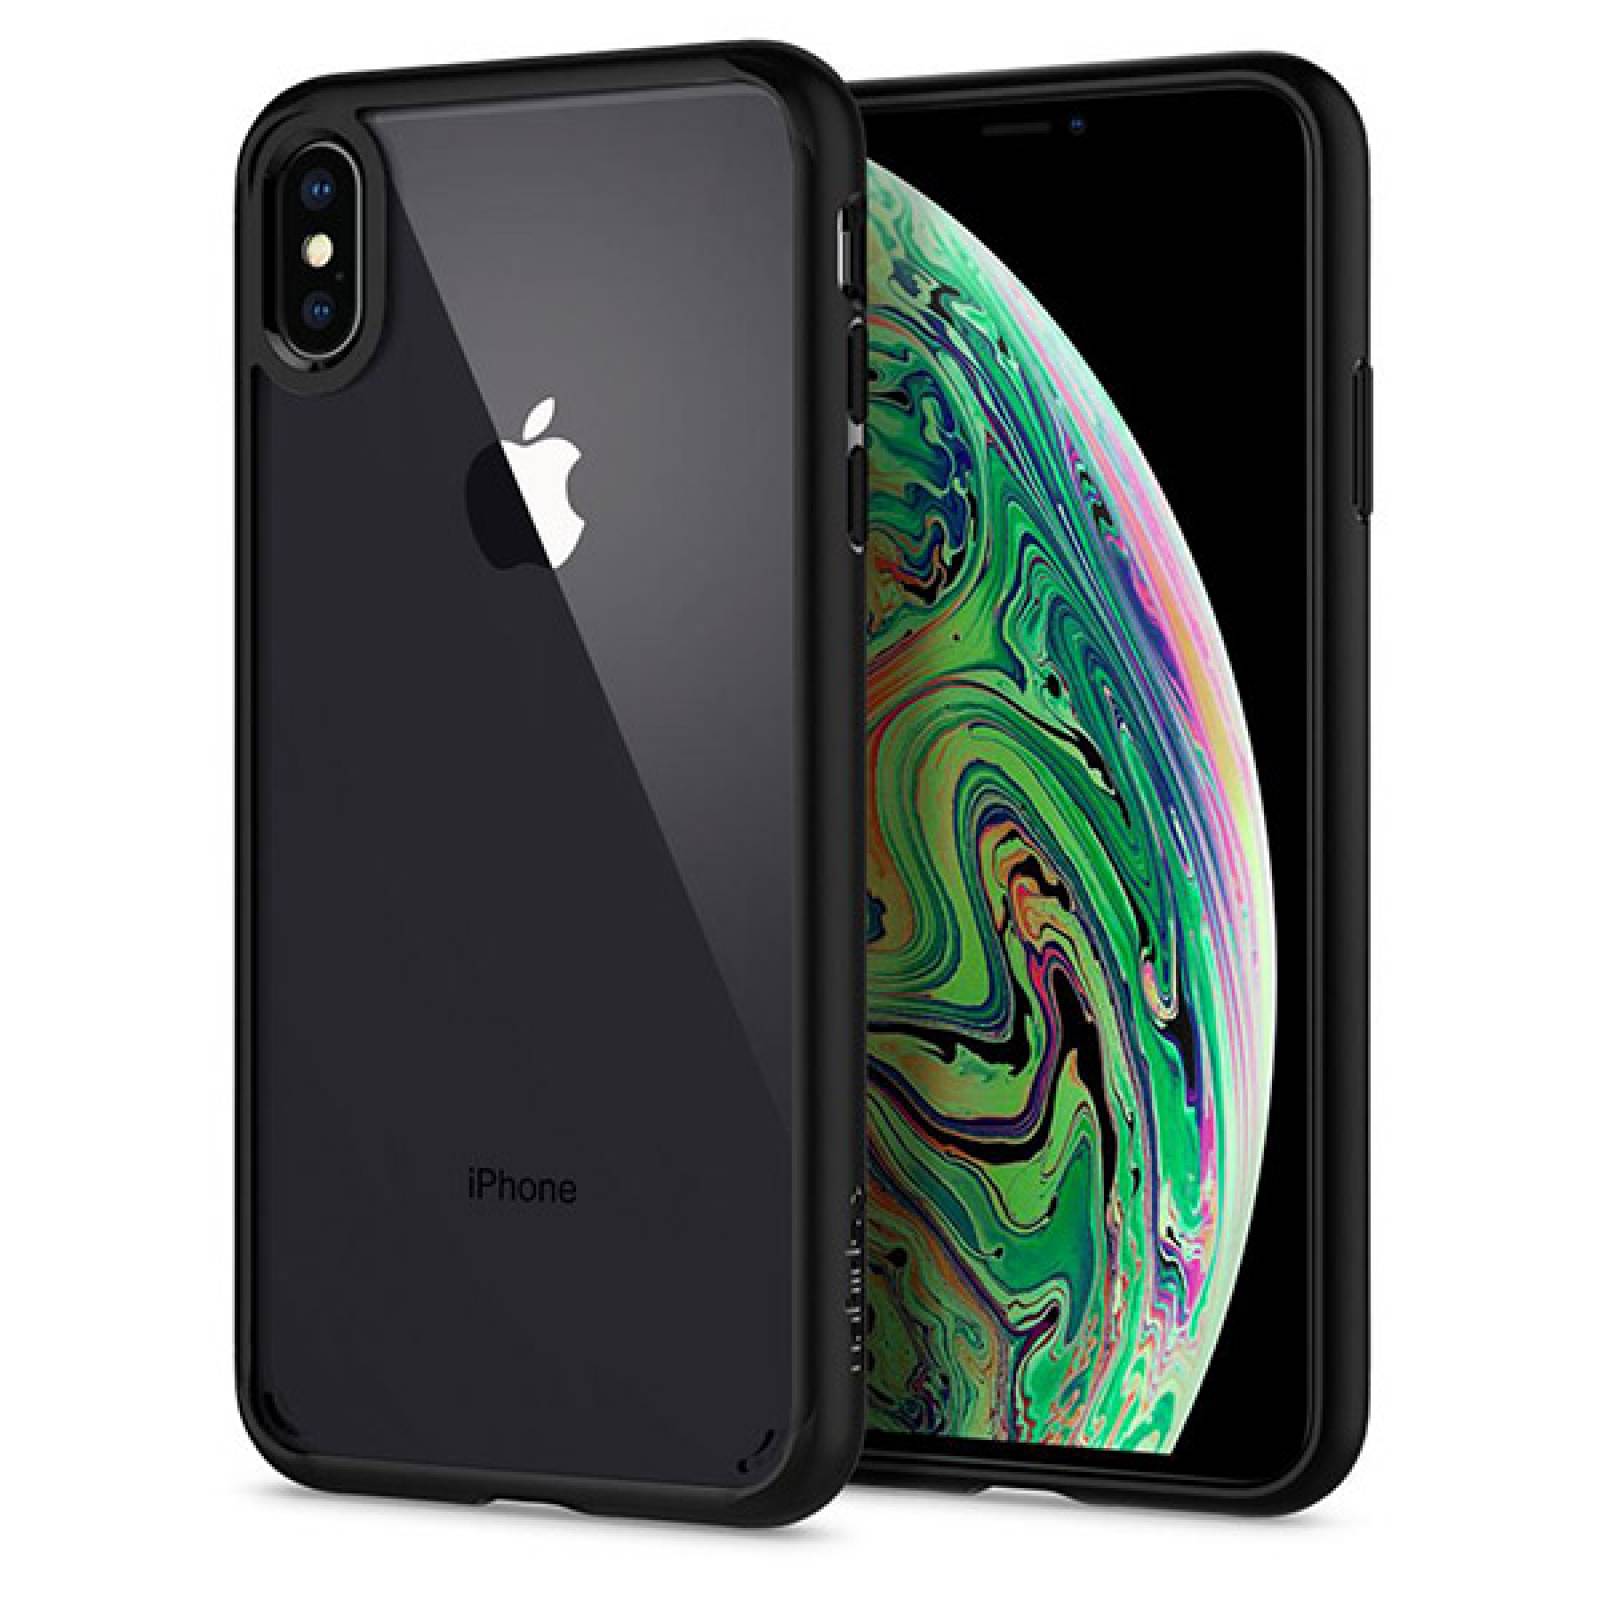 ImpactStrong Funda para iPhone X/iPhone Xs, funda ultra protectora con  protector de pantalla transparente integrado para iPhone X/iPhone Xs (negro)